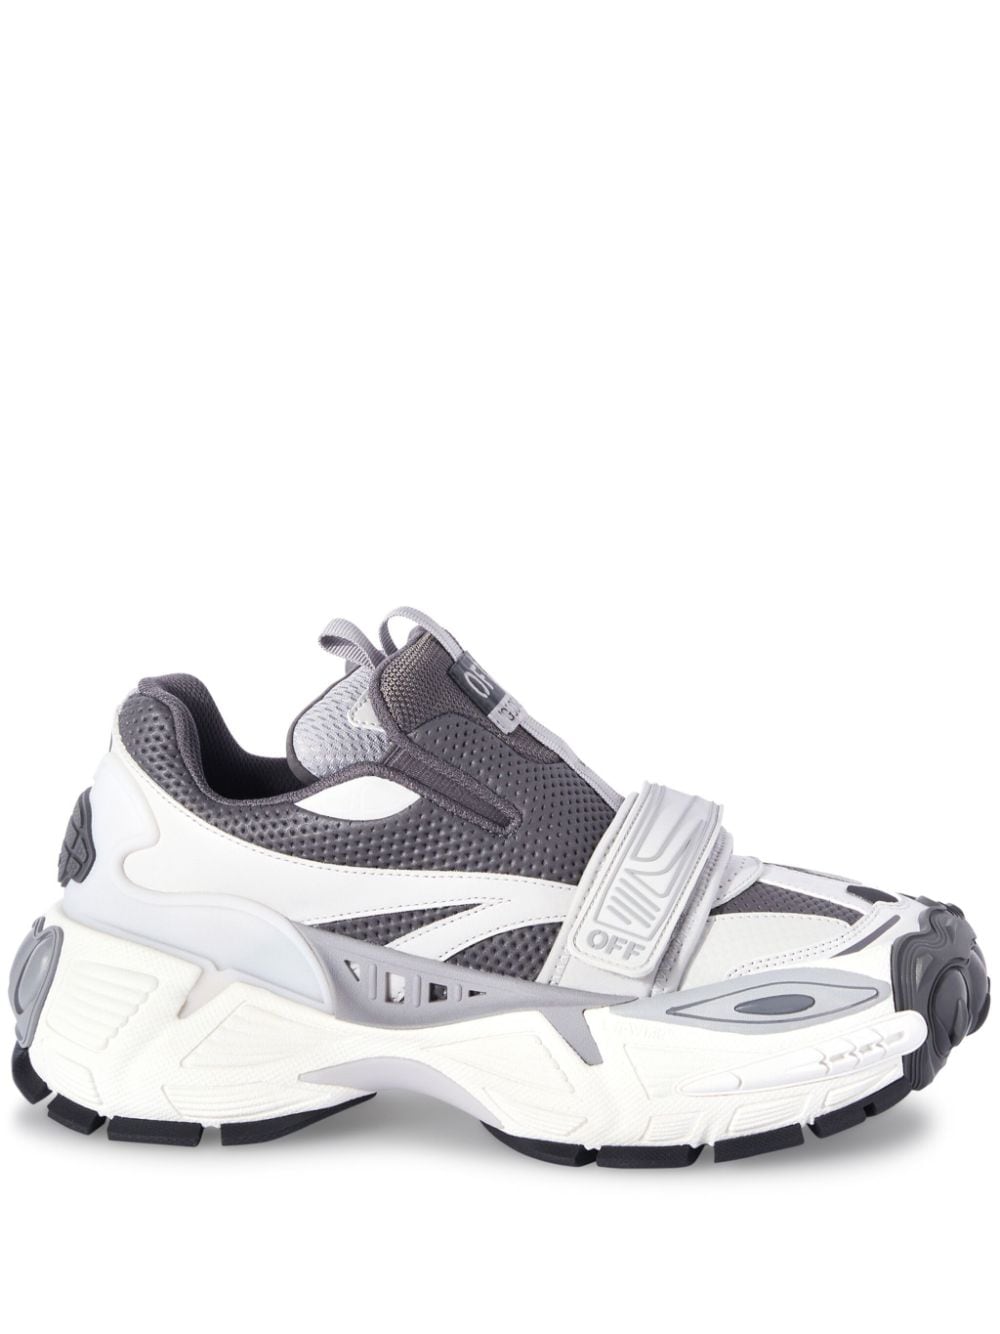 Off-White Glove Sneakers in Colour-Block-Optik - Grau von Off-White